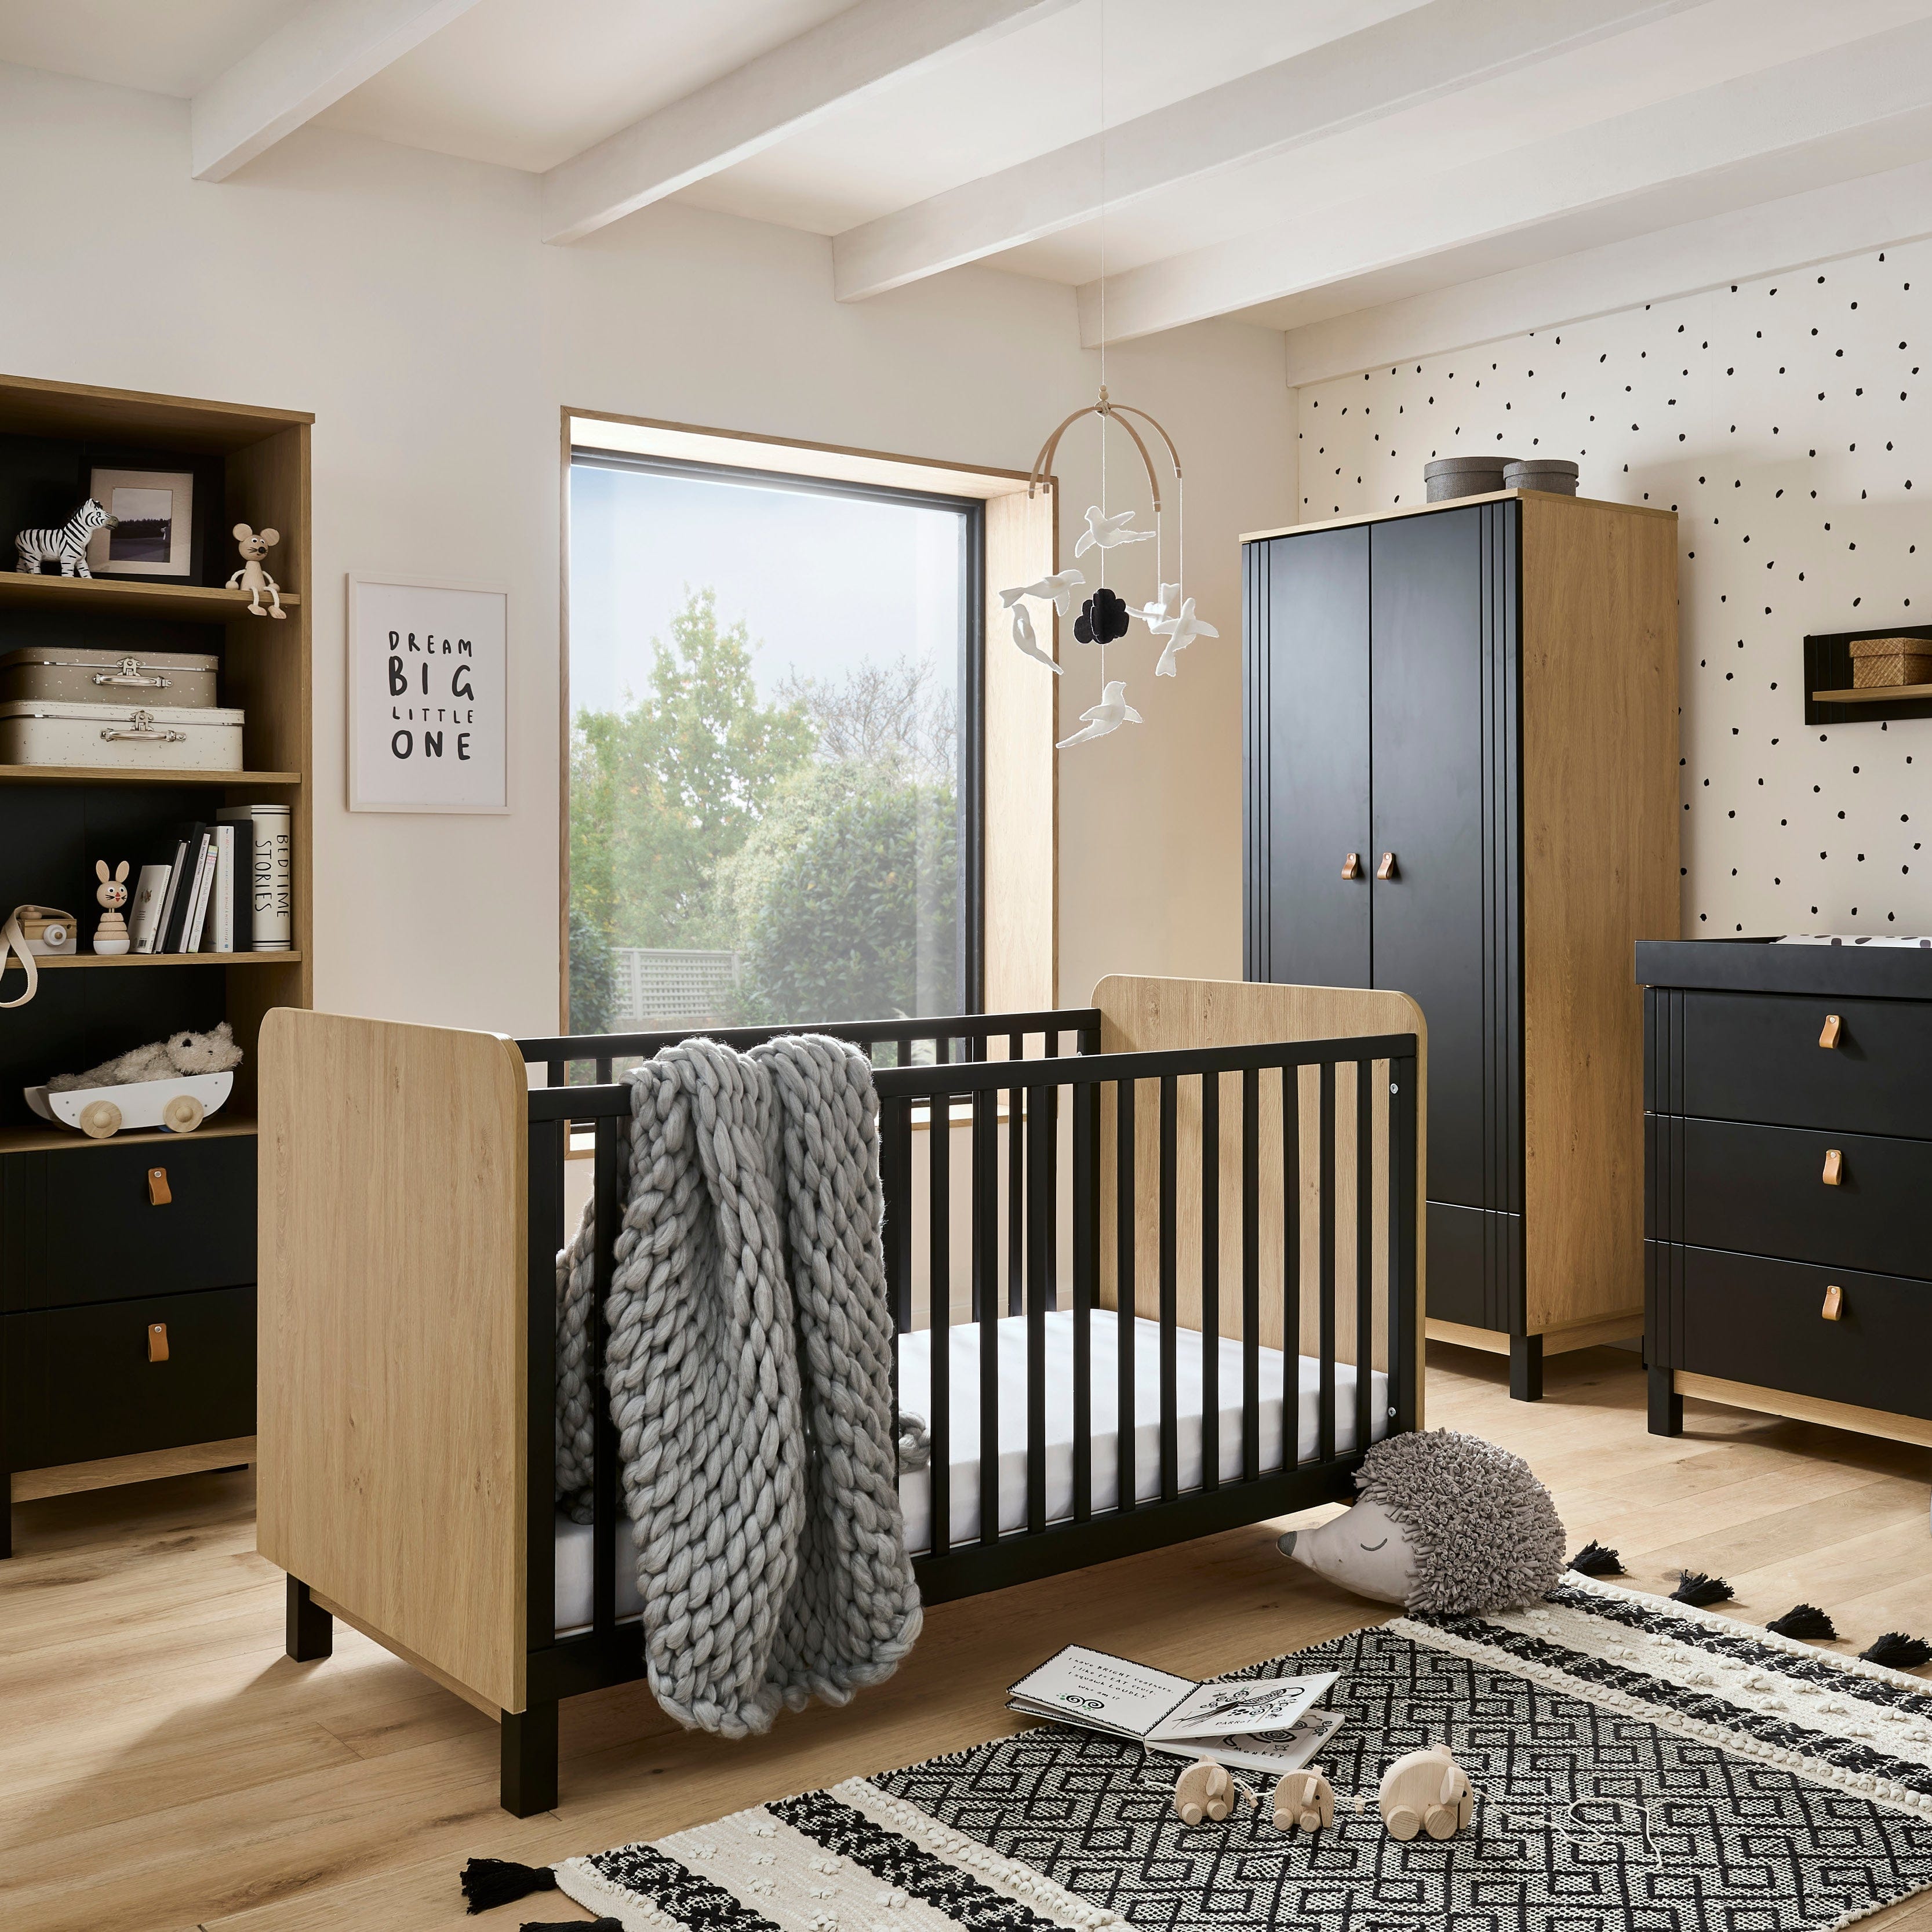 CuddleCo Nursery Room Sets CuddleCo Rafi 5 Piece Room Set in Oak/Black